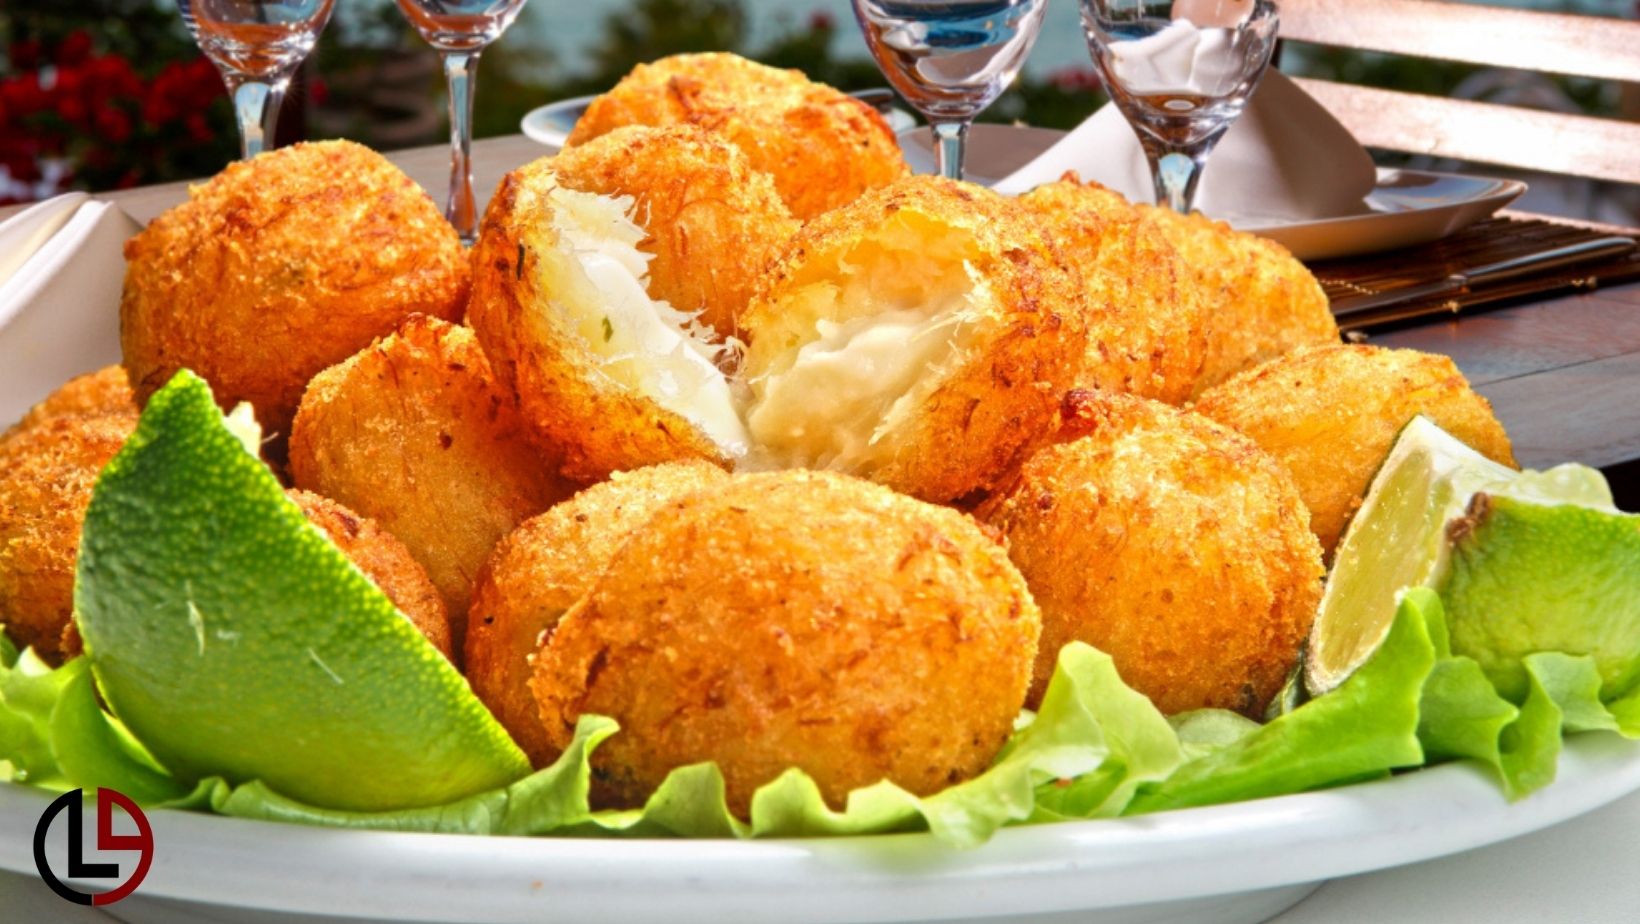 Salt cod fritters are an Italian dish that is made with salt cod flour eggs